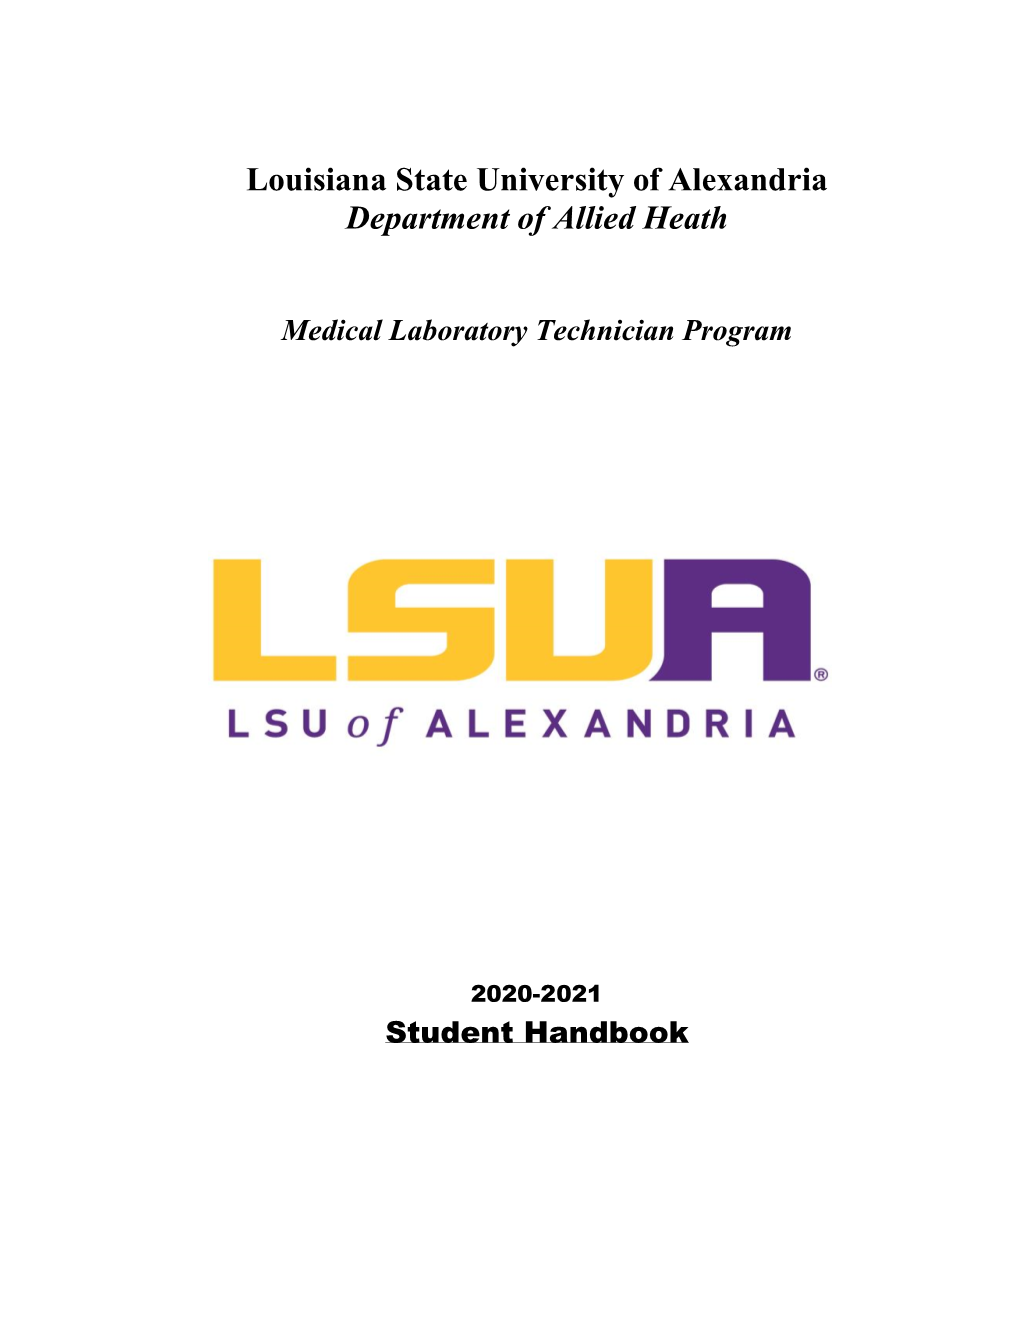 Louisiana State University of Alexandria Department of Allied Heath